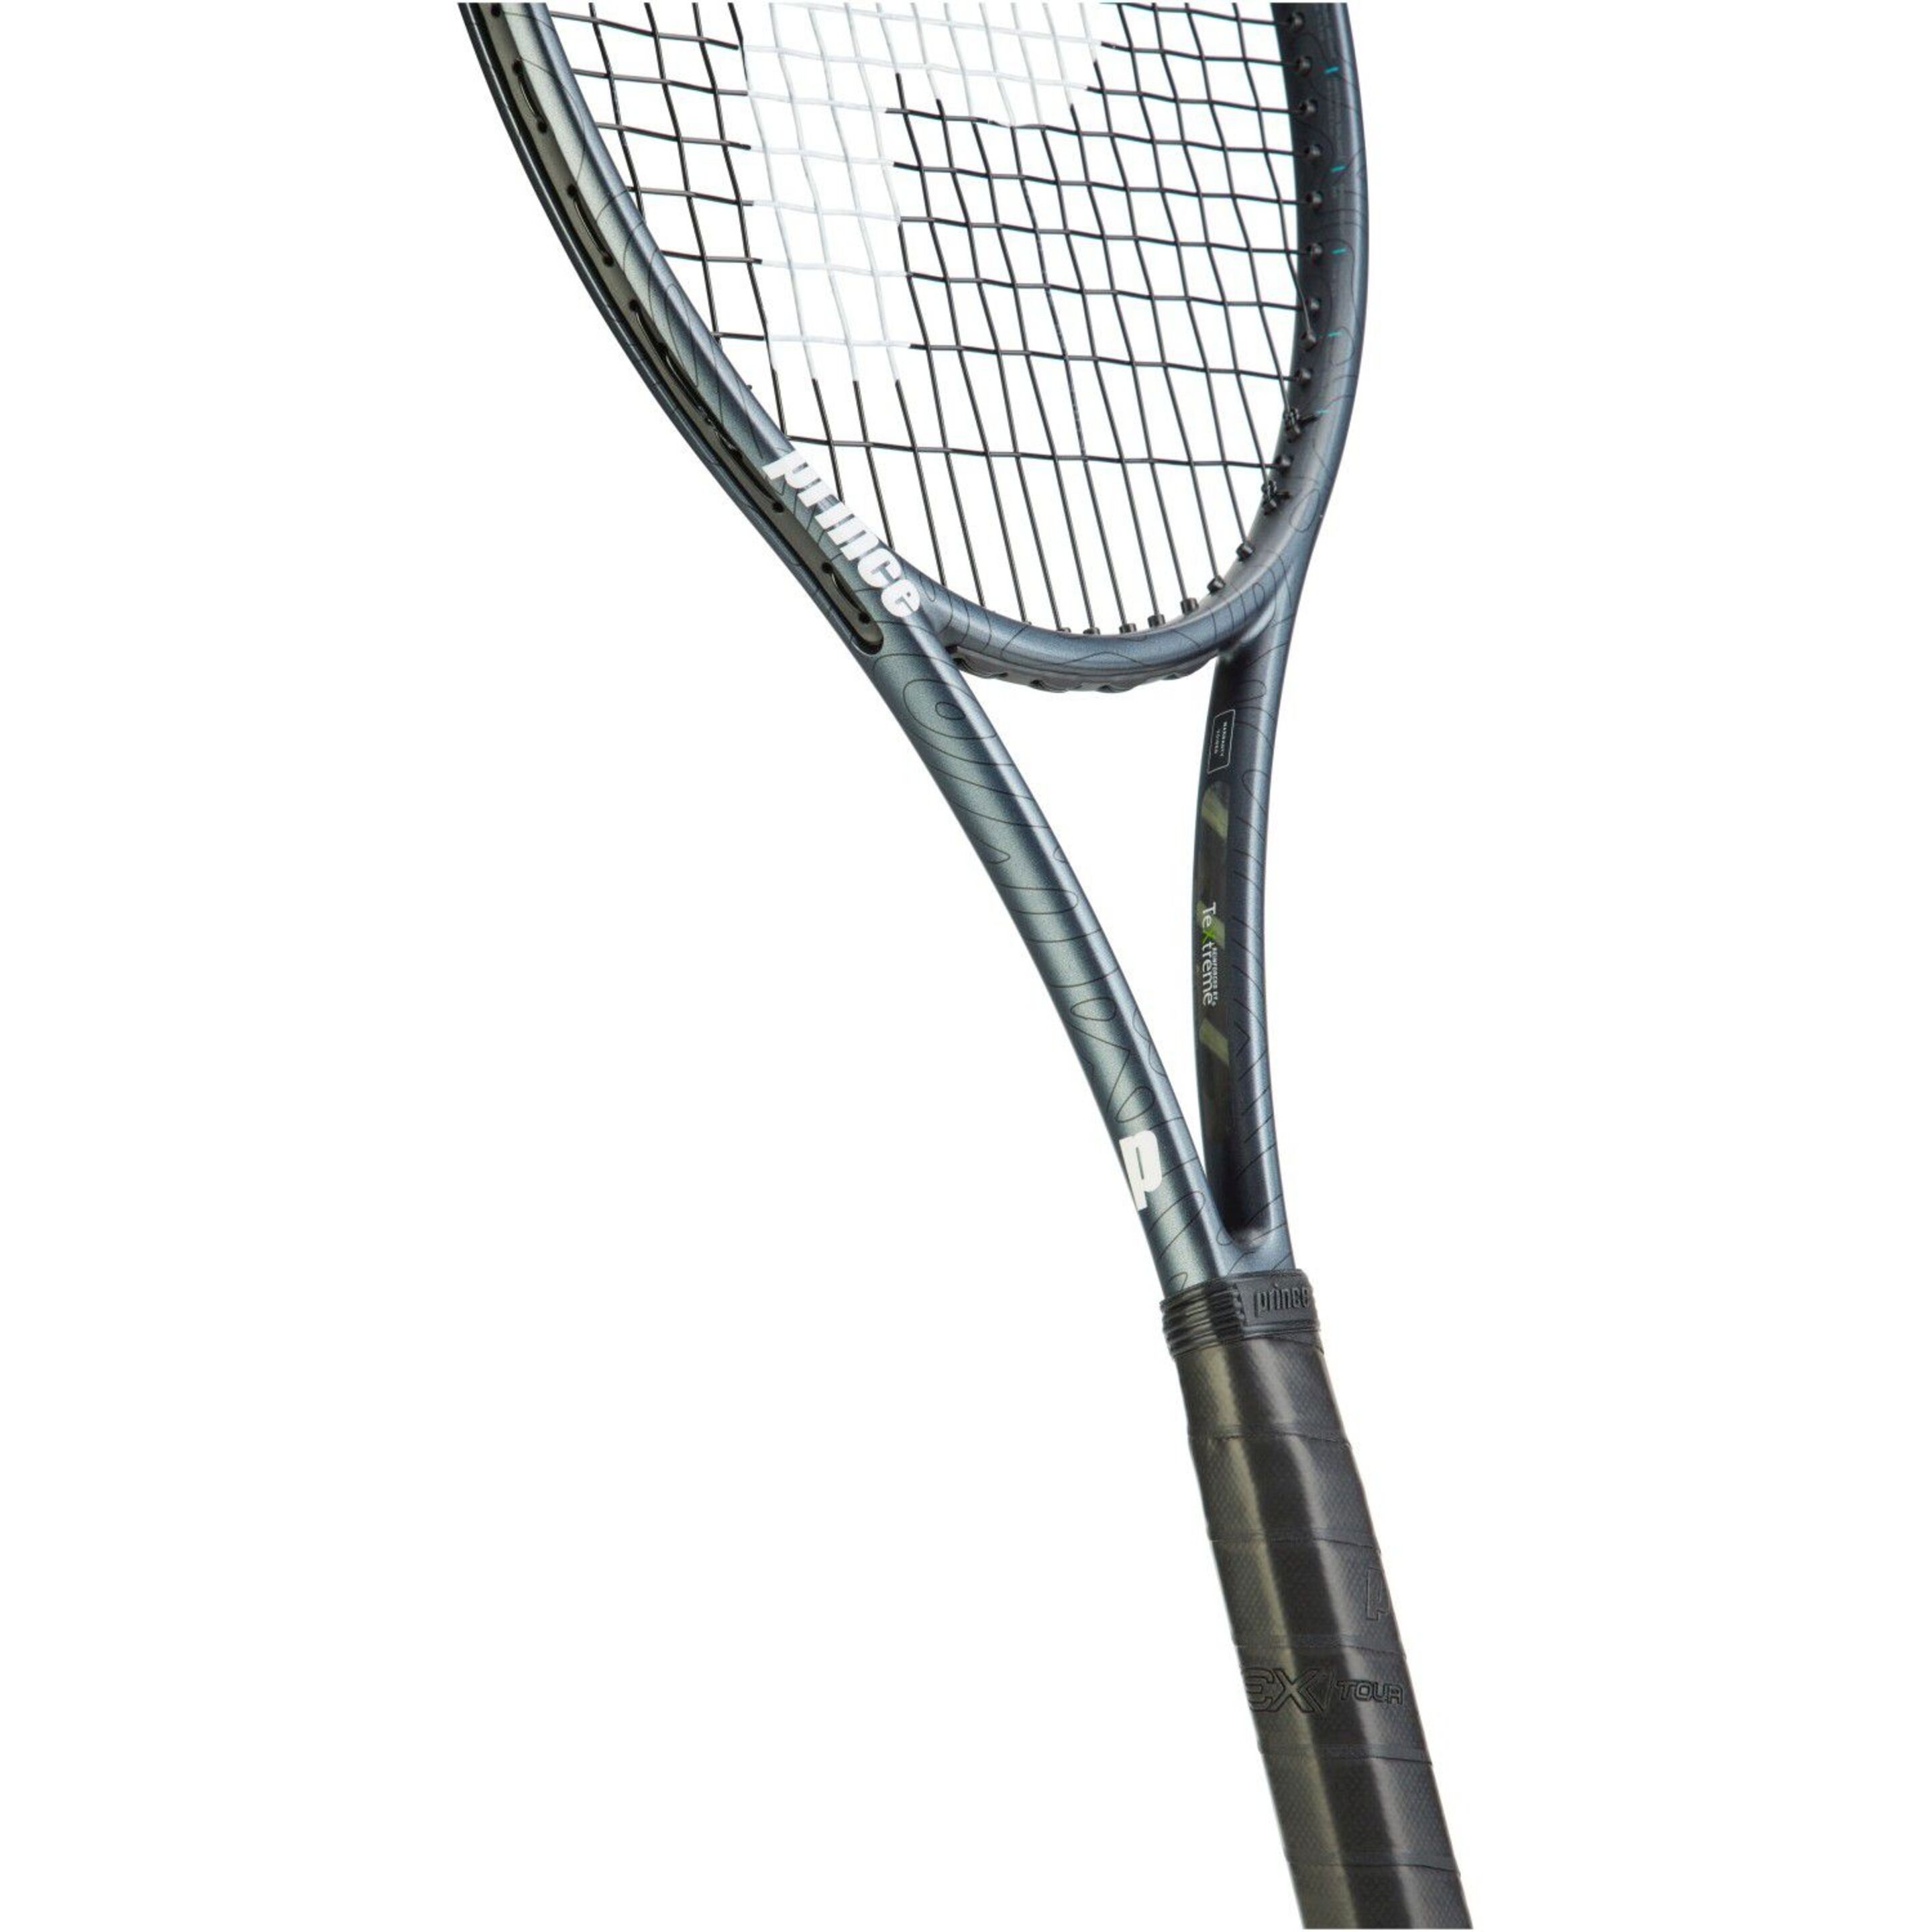 Raqueta De Tenis Prince Txt2.5 Phantom 100x (18x20) 320 G (sin Encordar Y Sin Funda) - Gris  MKP